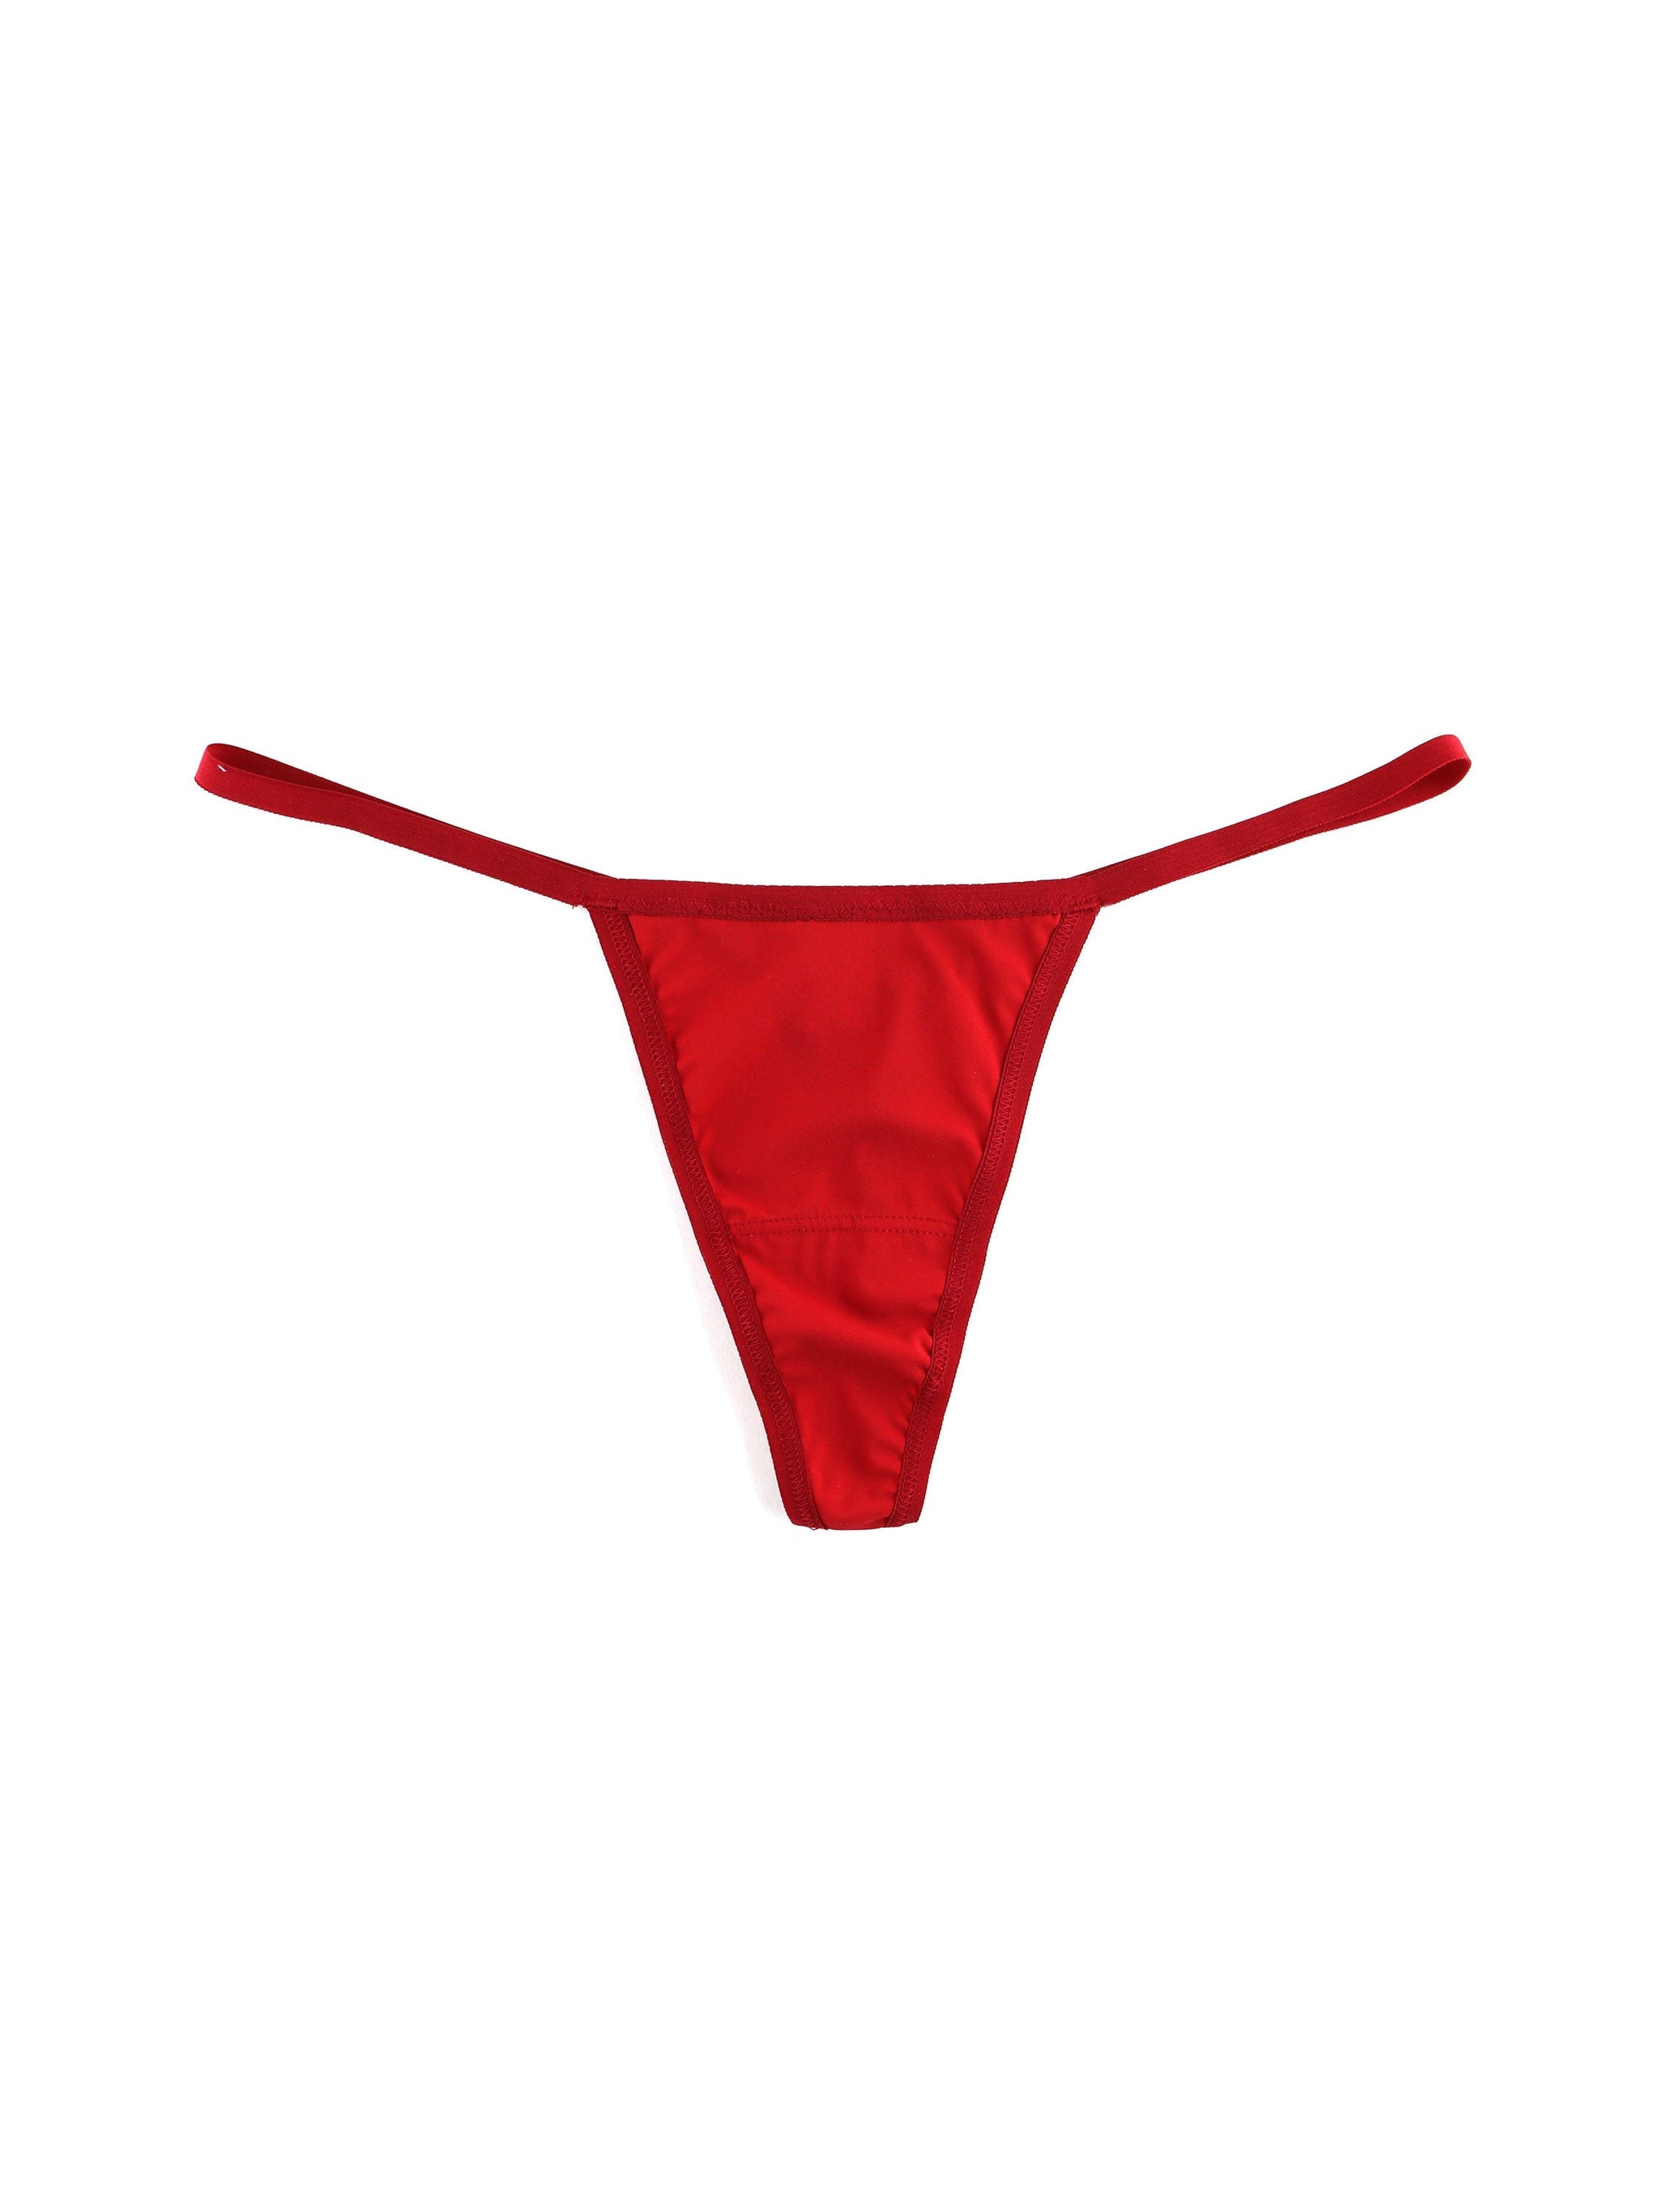 Thongs string Briefs G-string Lingerie Underwear T Sexy Panties